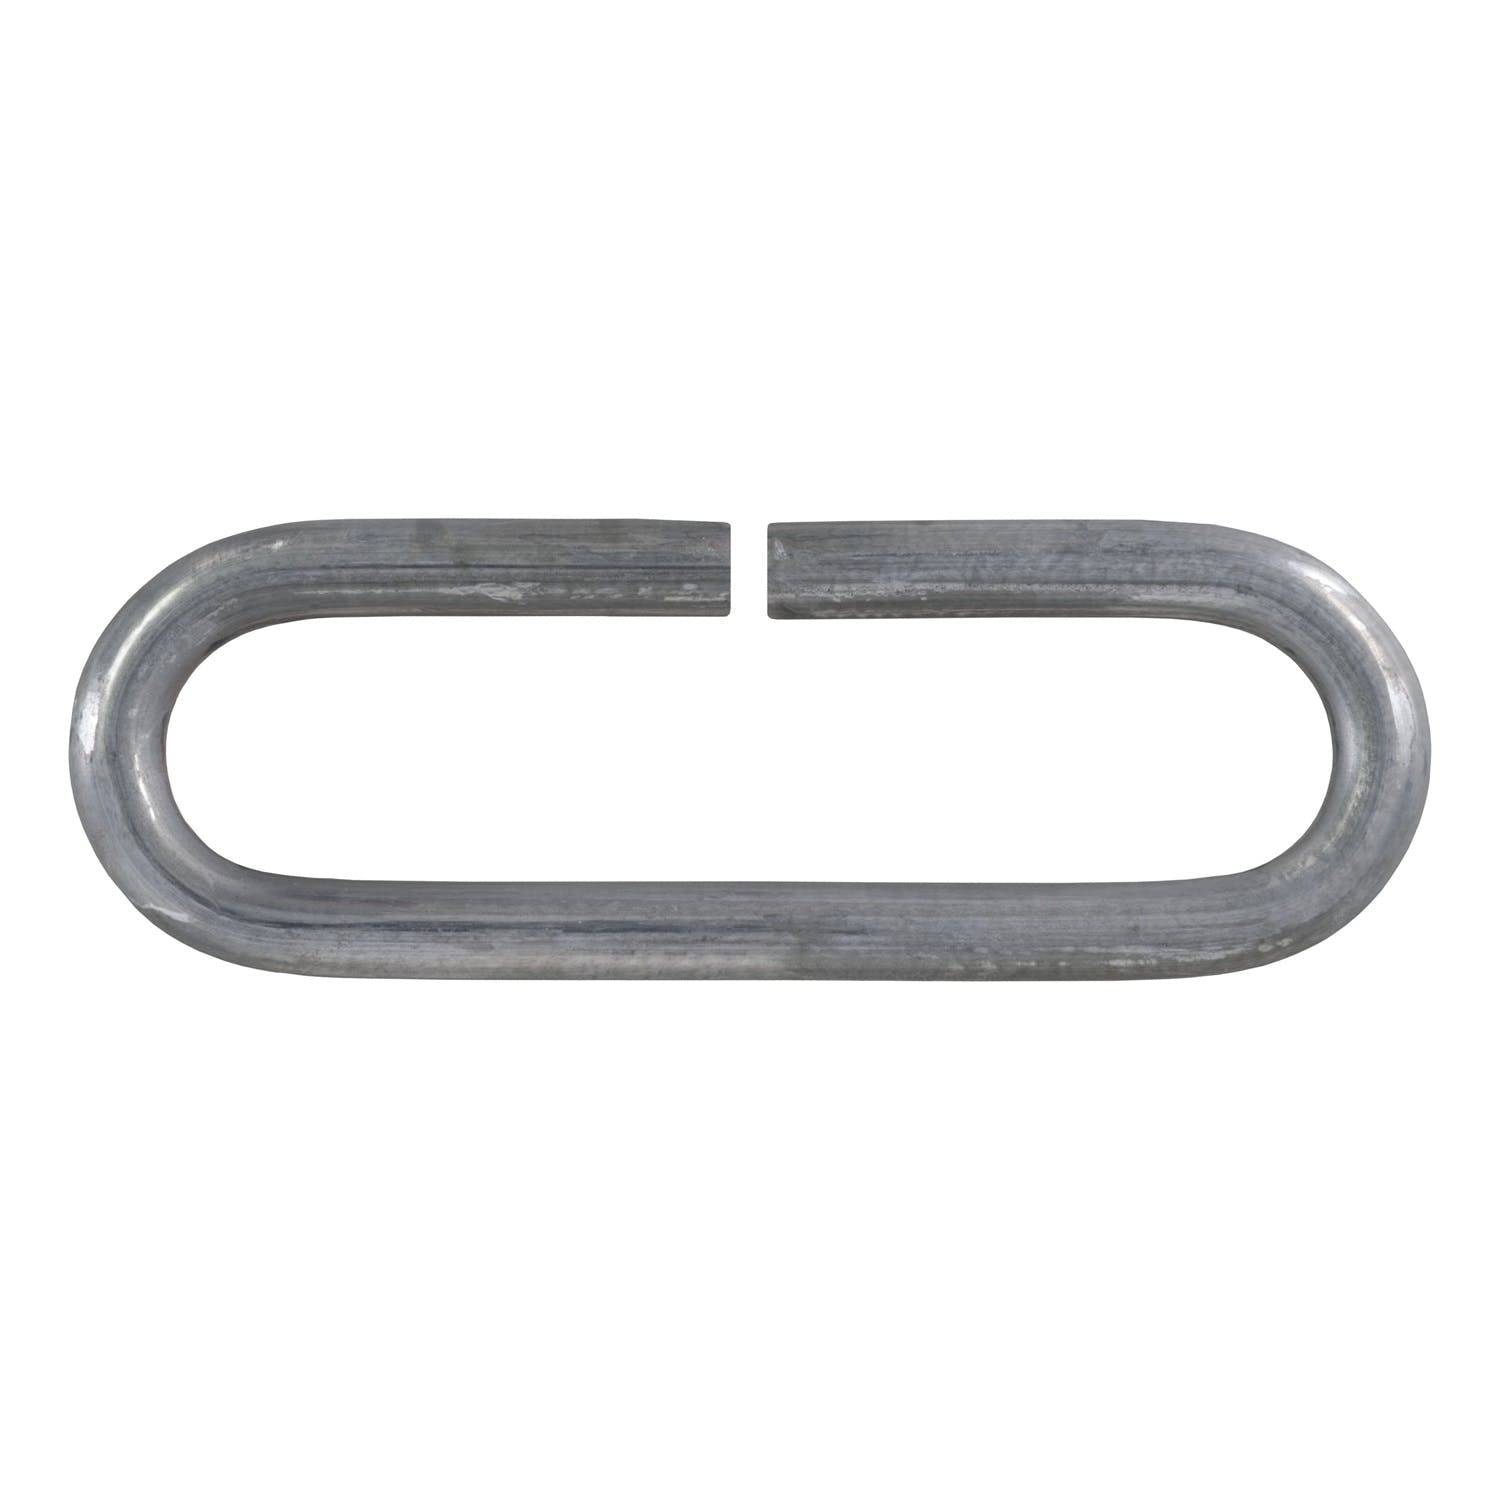 CURT 49950 Raw Steel Weld-On Safety Chain Loop (10,000 lbs. Capacity)